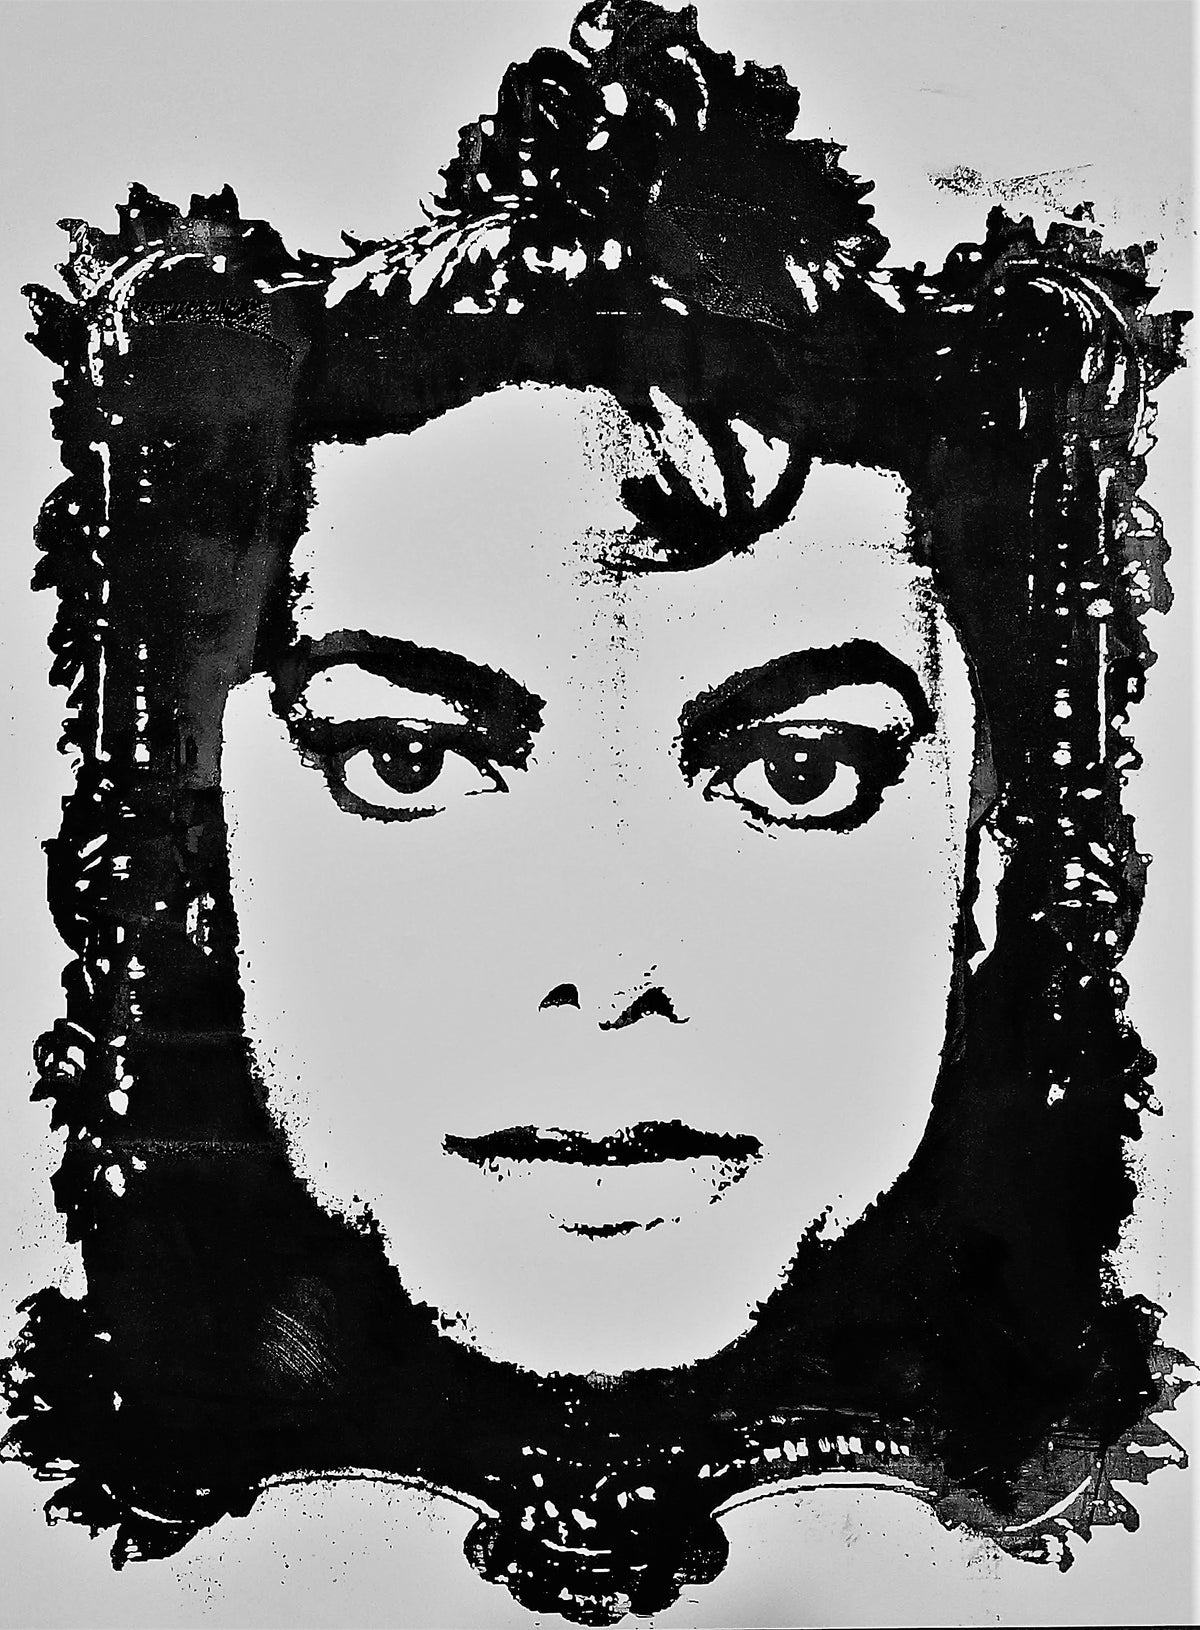 18x24 Original Artwork Michael Jackson, "Man in the Mirror"